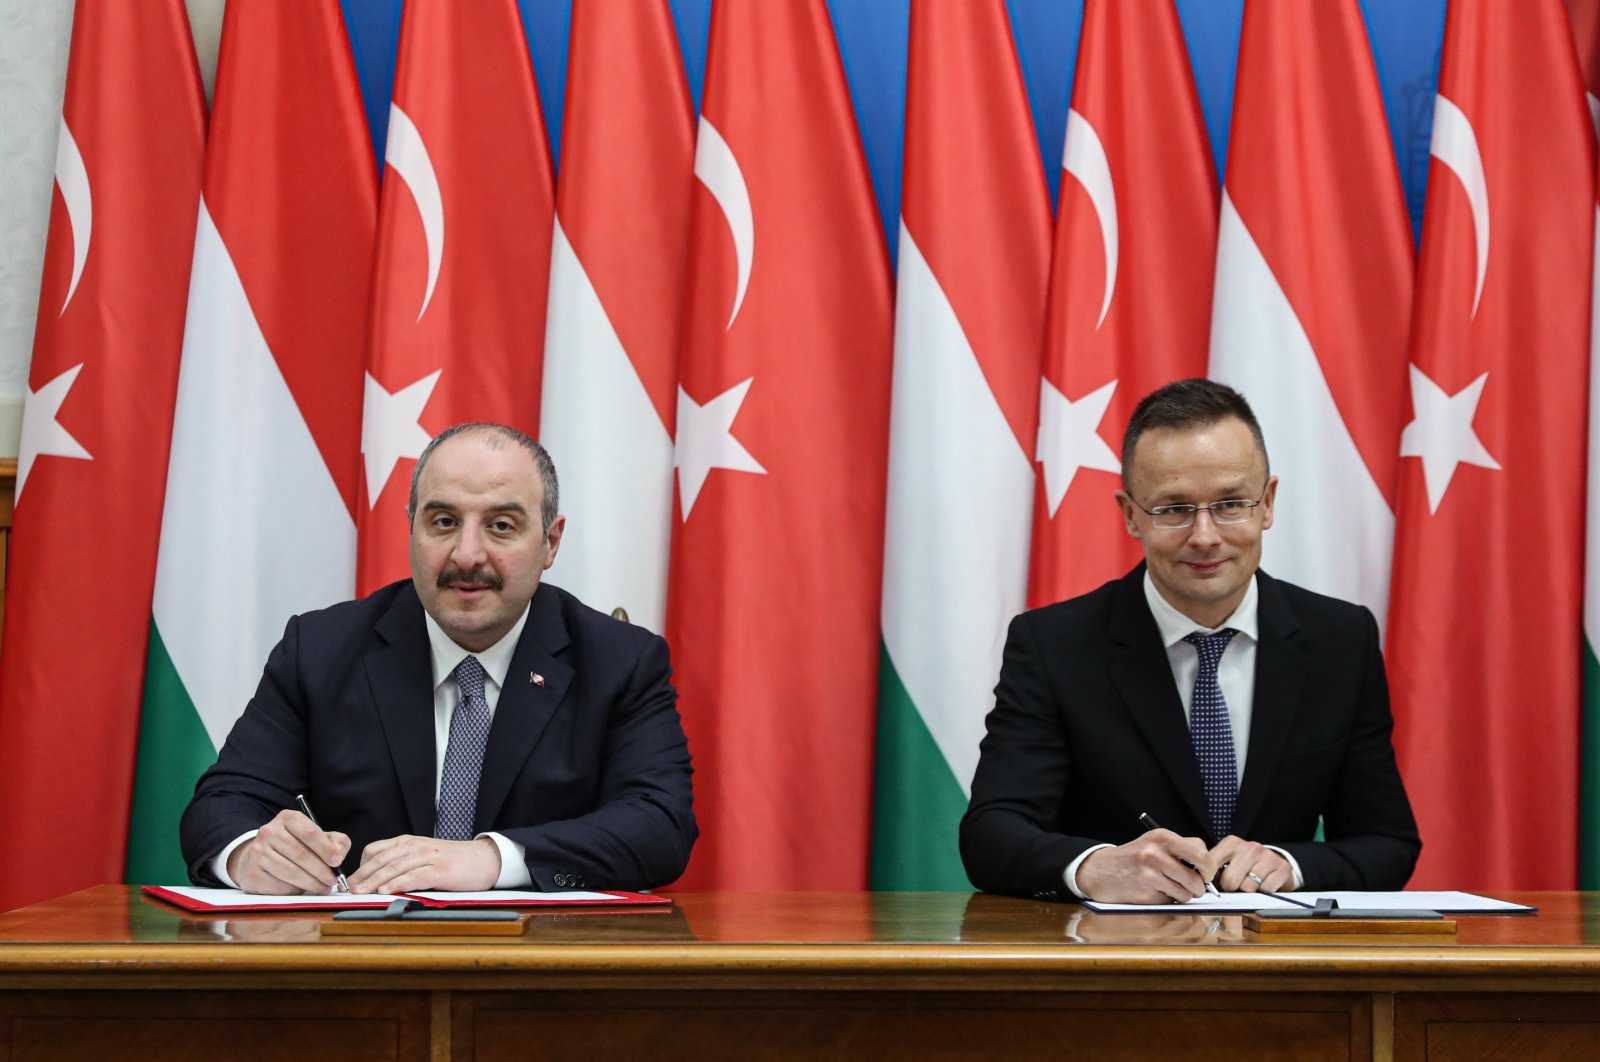 Türkiye can supply Hungary with HIMARS alternatives: Minister